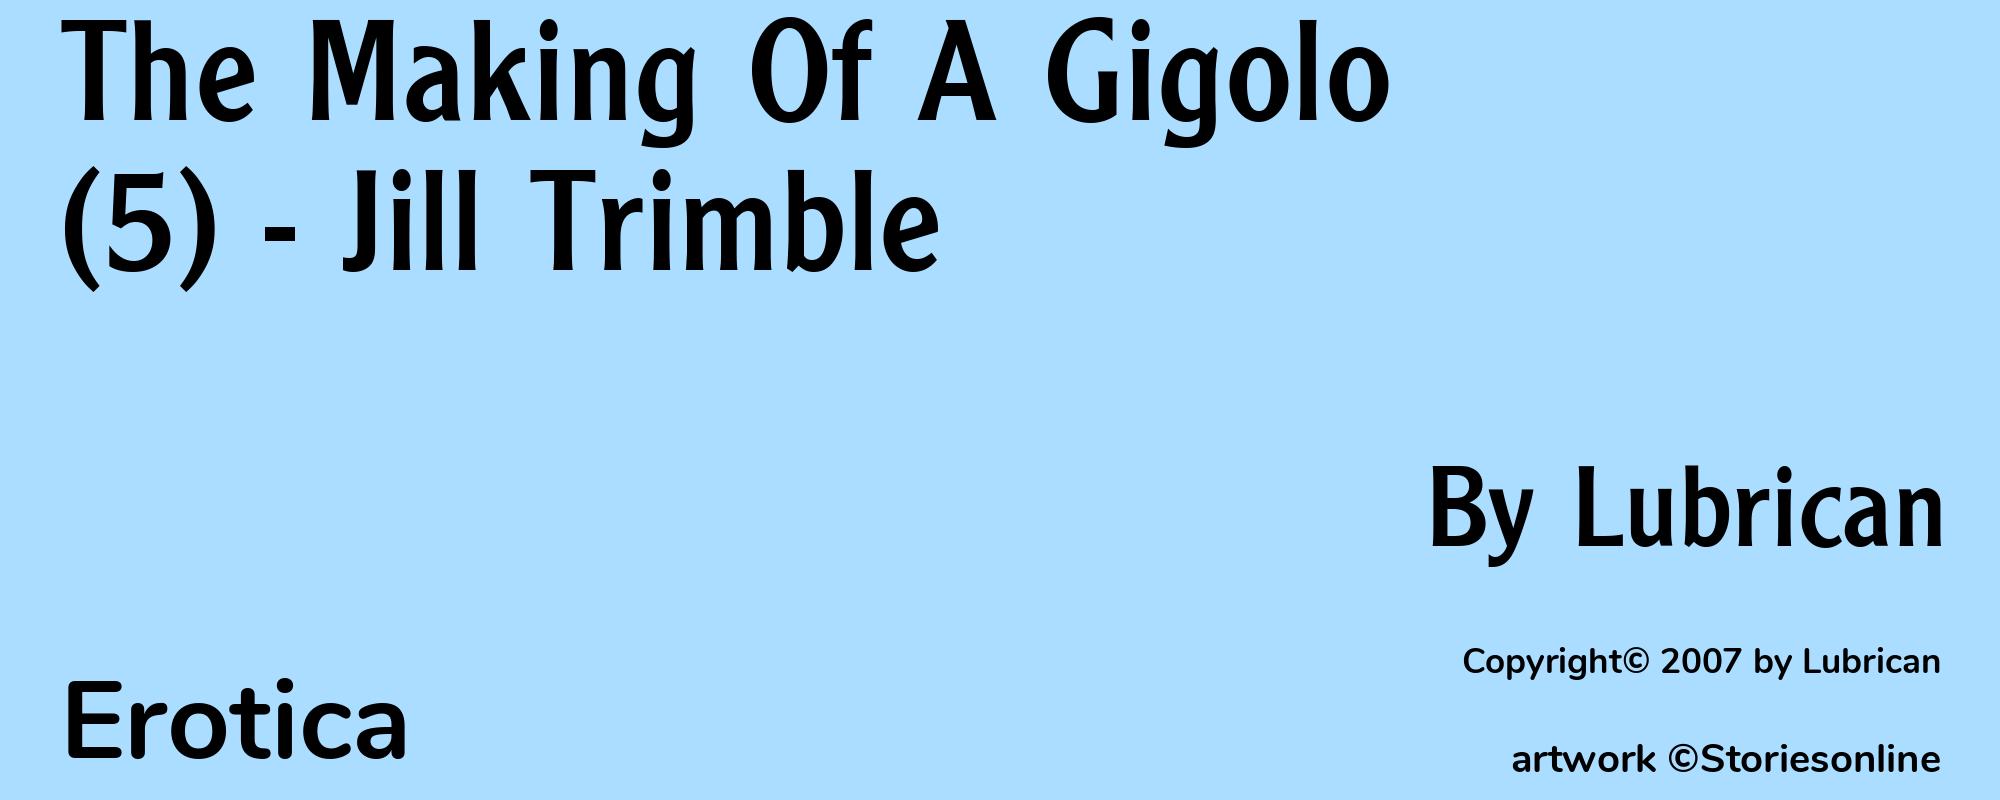 The Making Of A Gigolo (5) - Jill Trimble - Cover